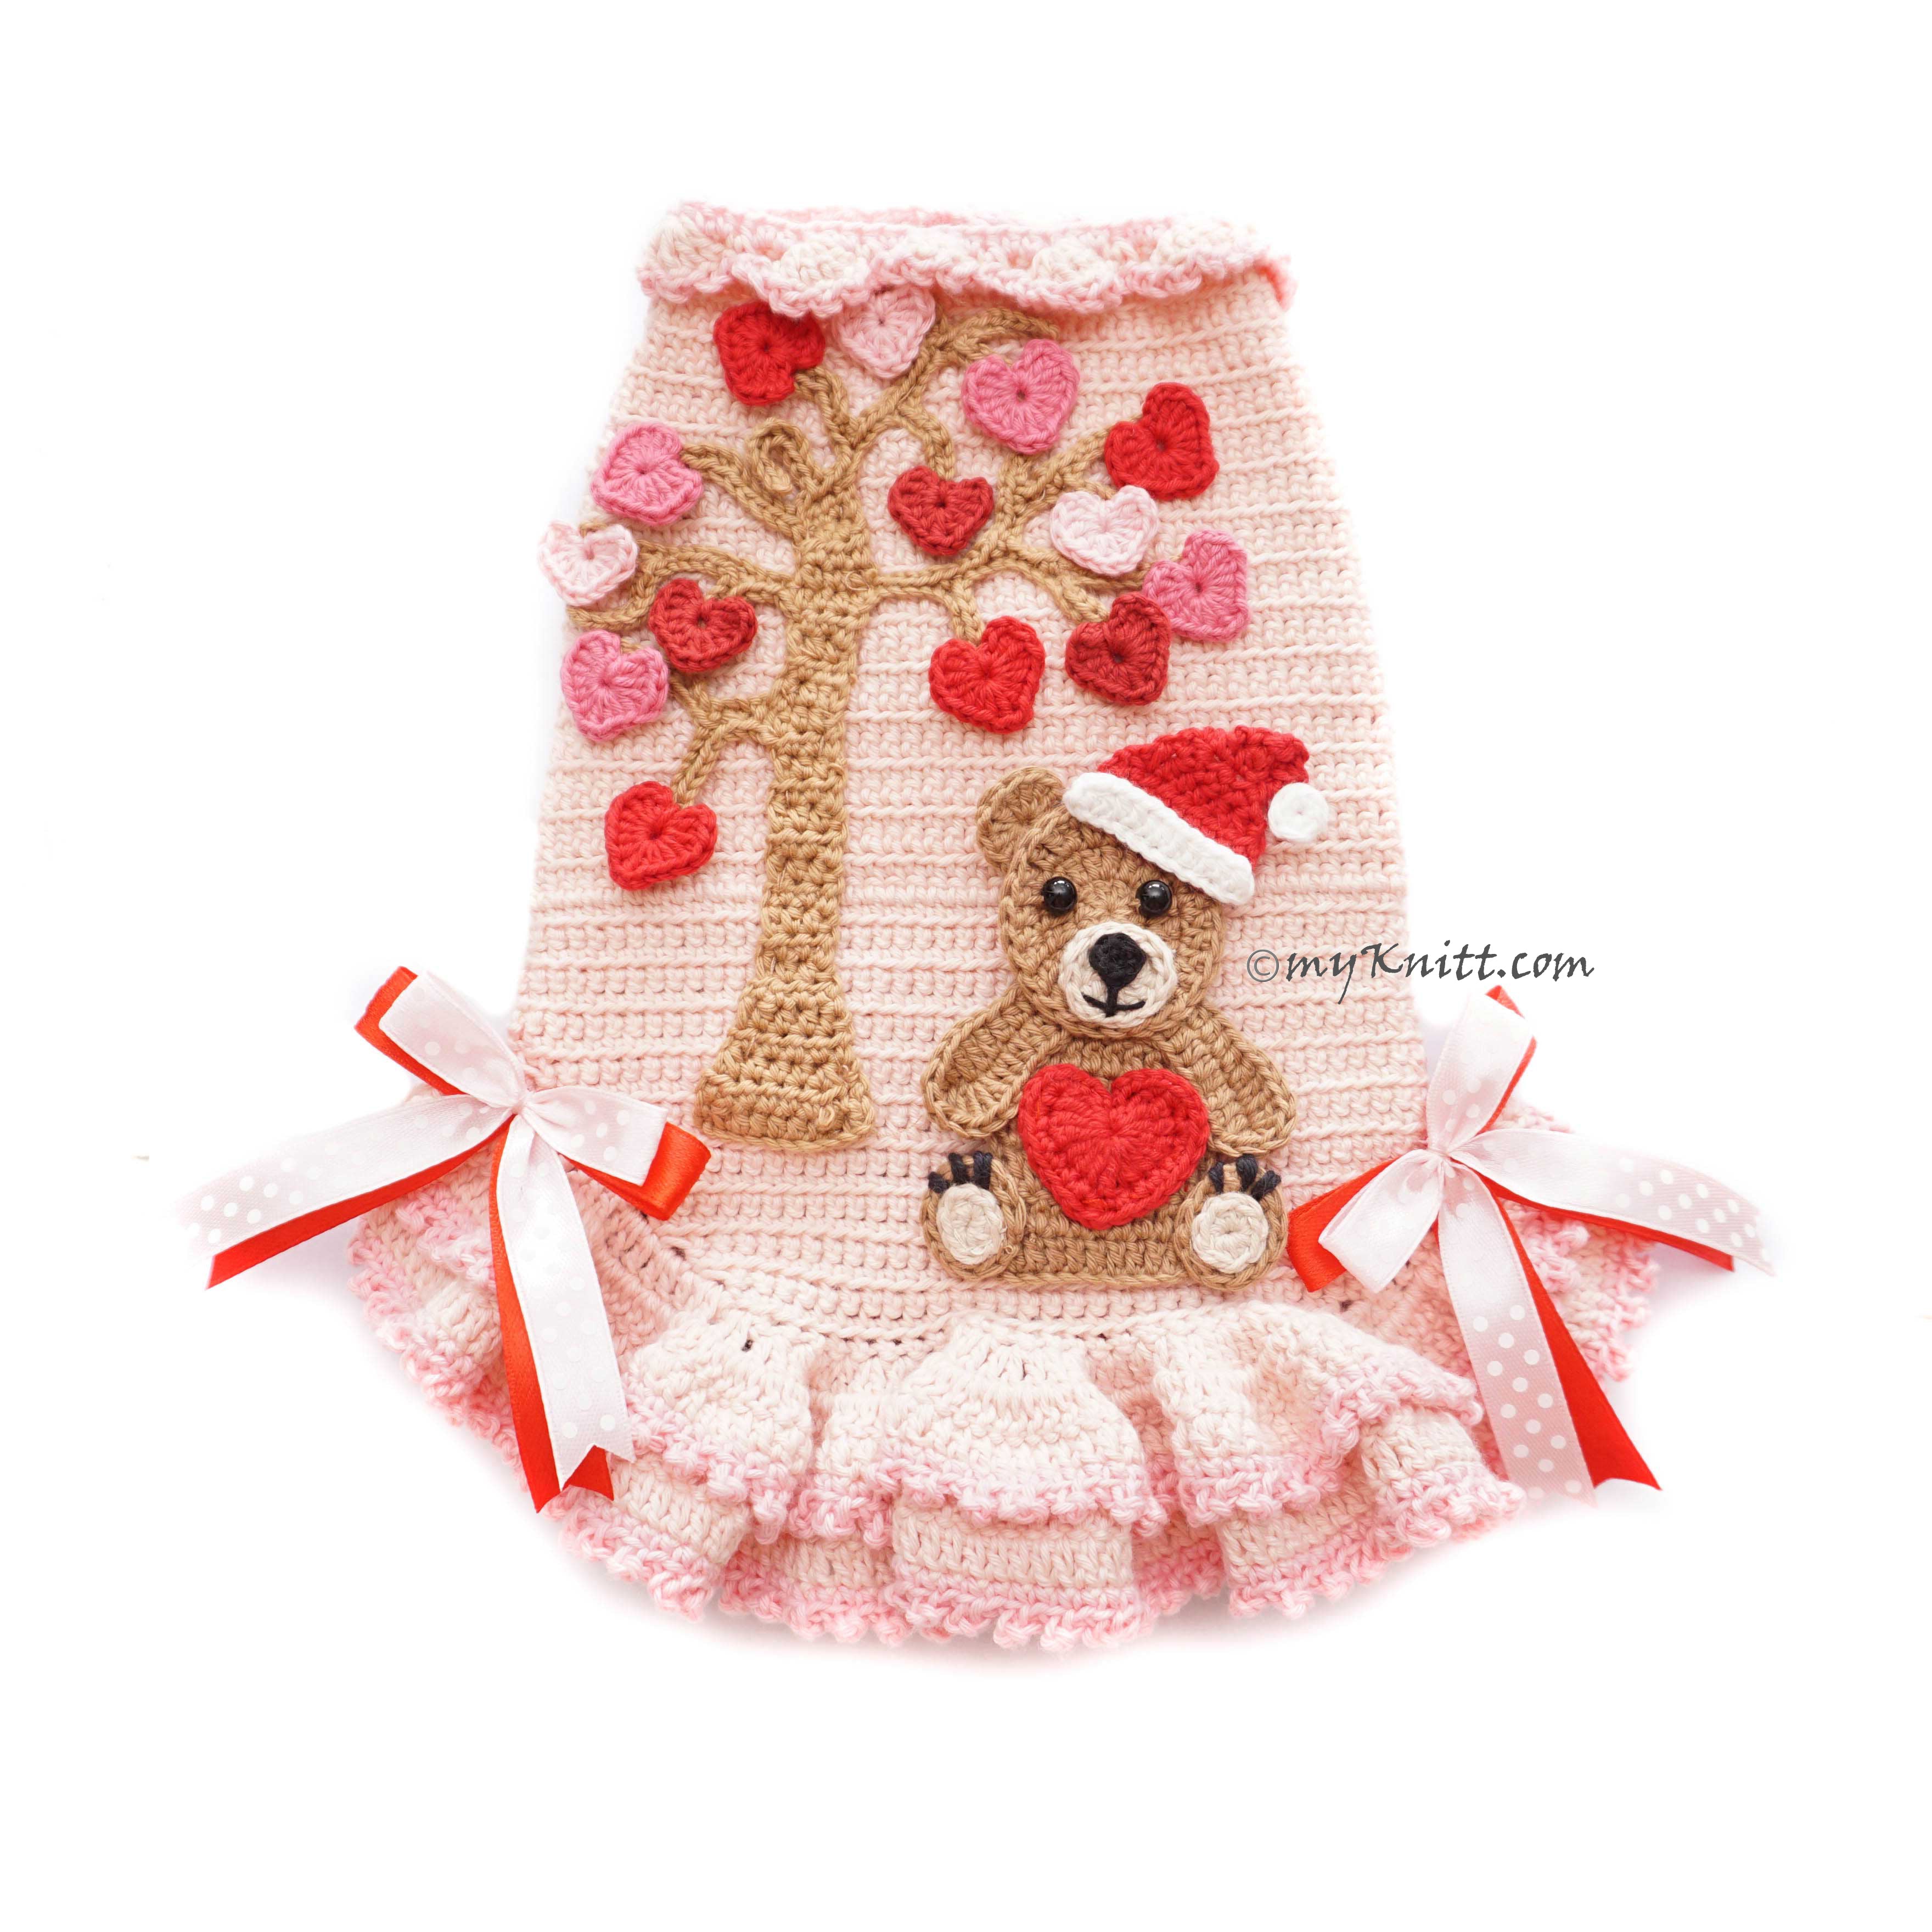 Crochet Teddy Valentine Dress for Dogs Cats, Cute Dog Clothes Pink Valentine DF210 Myknitt